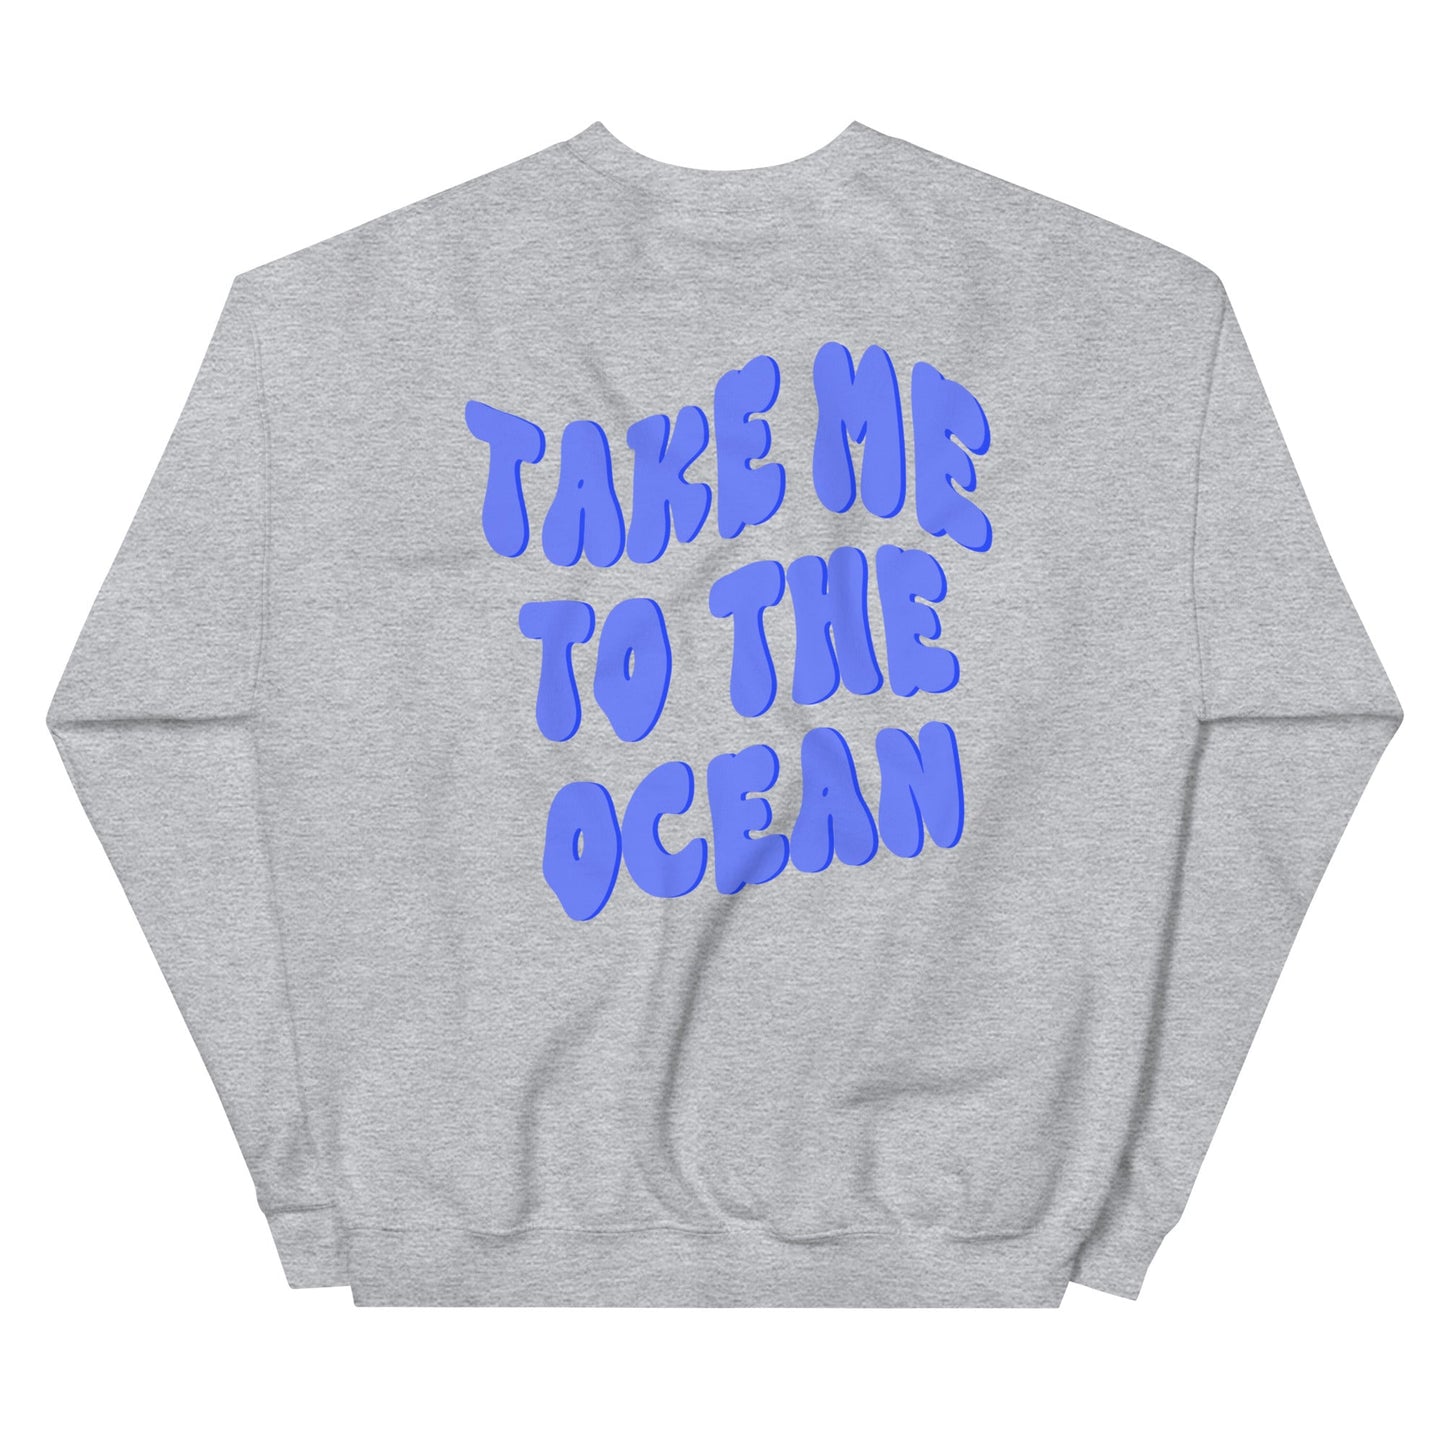 Take Me To The Ocean Crew